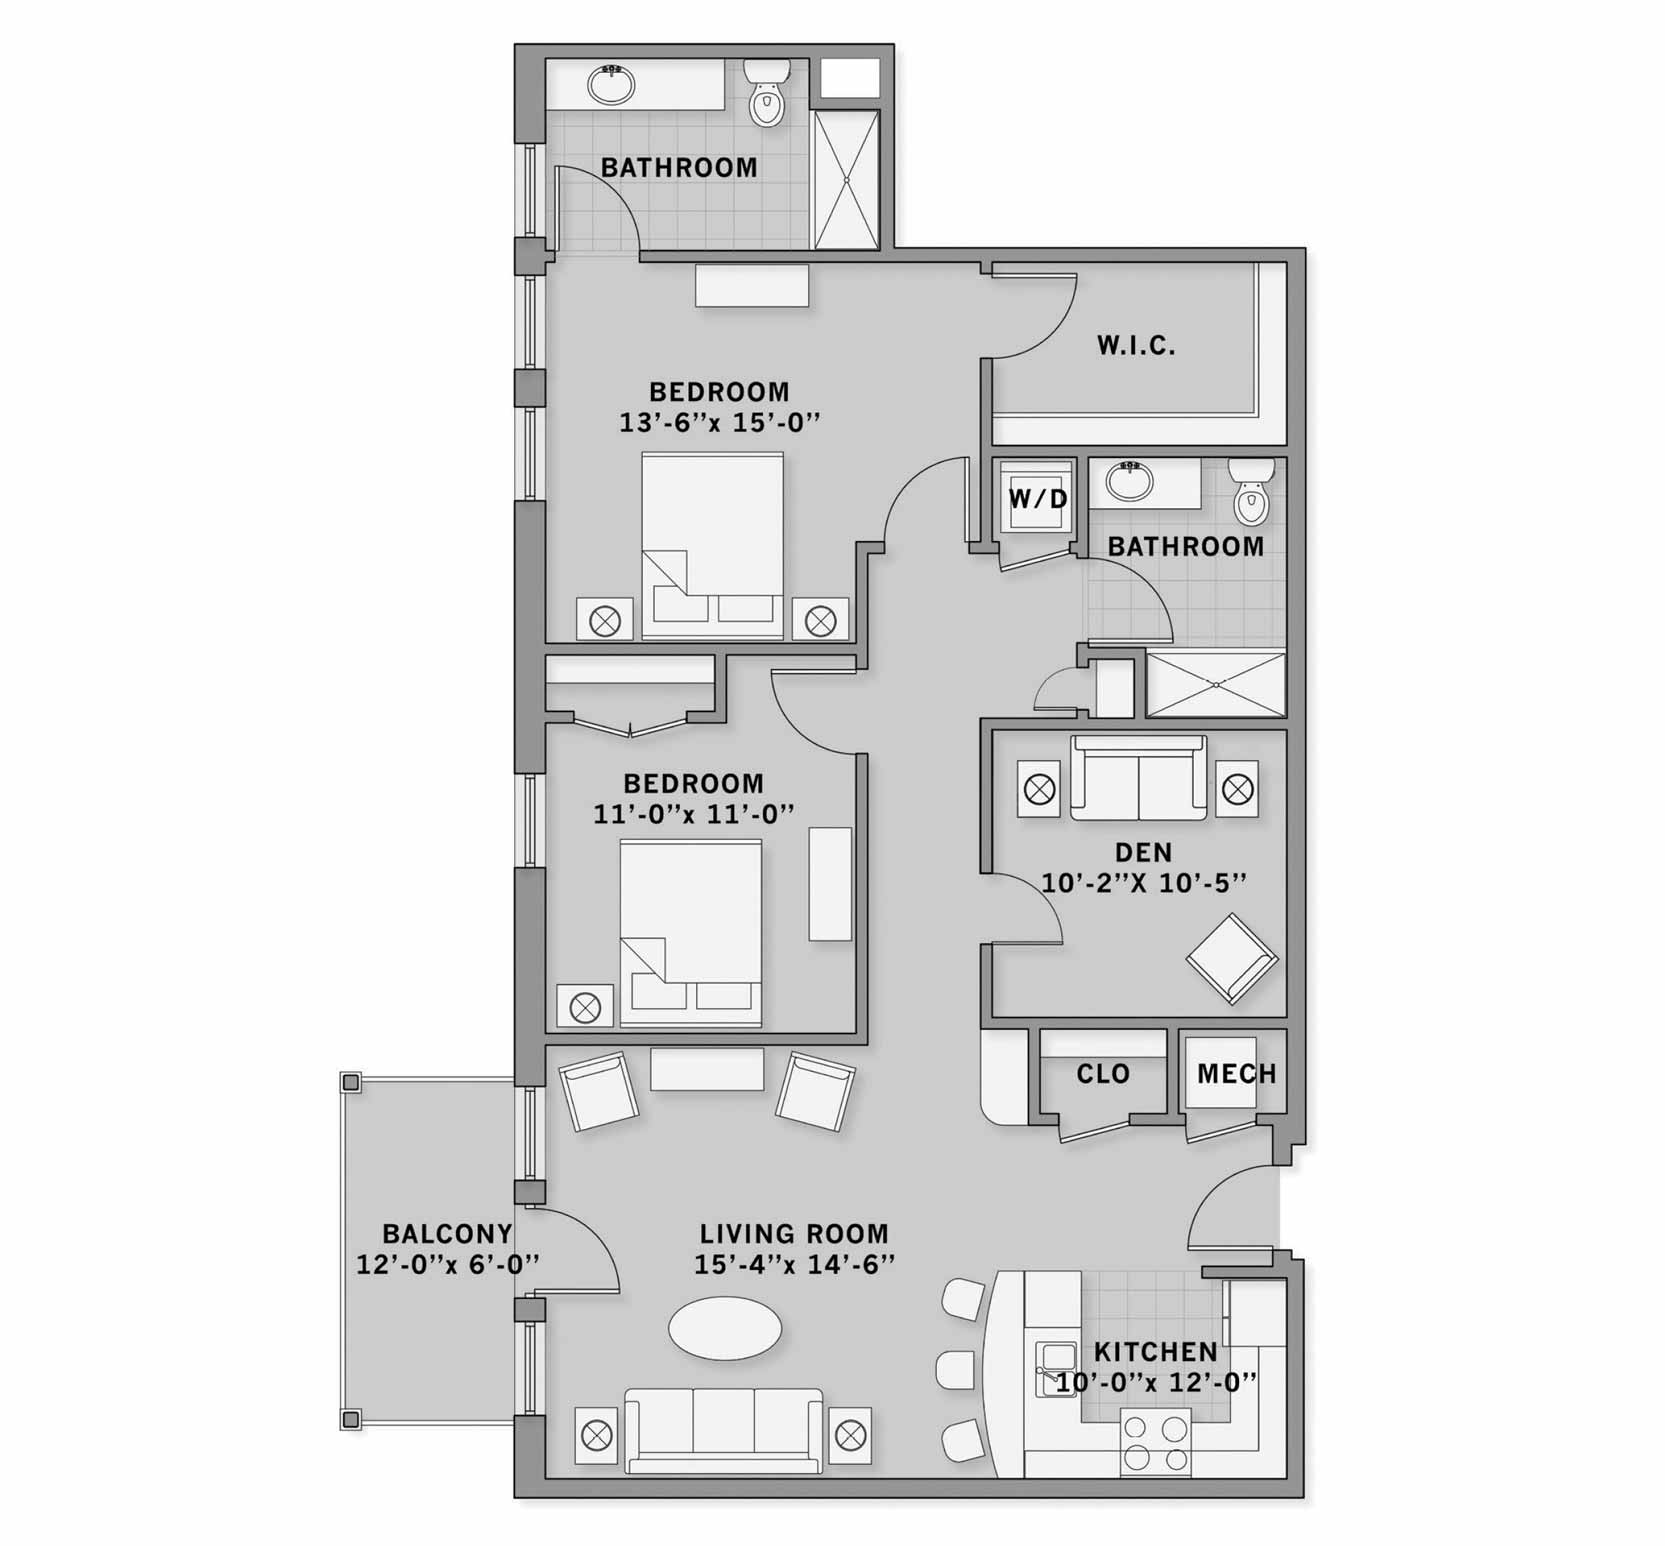 Simpson House floor plan - Grant senior living apartment floor plan